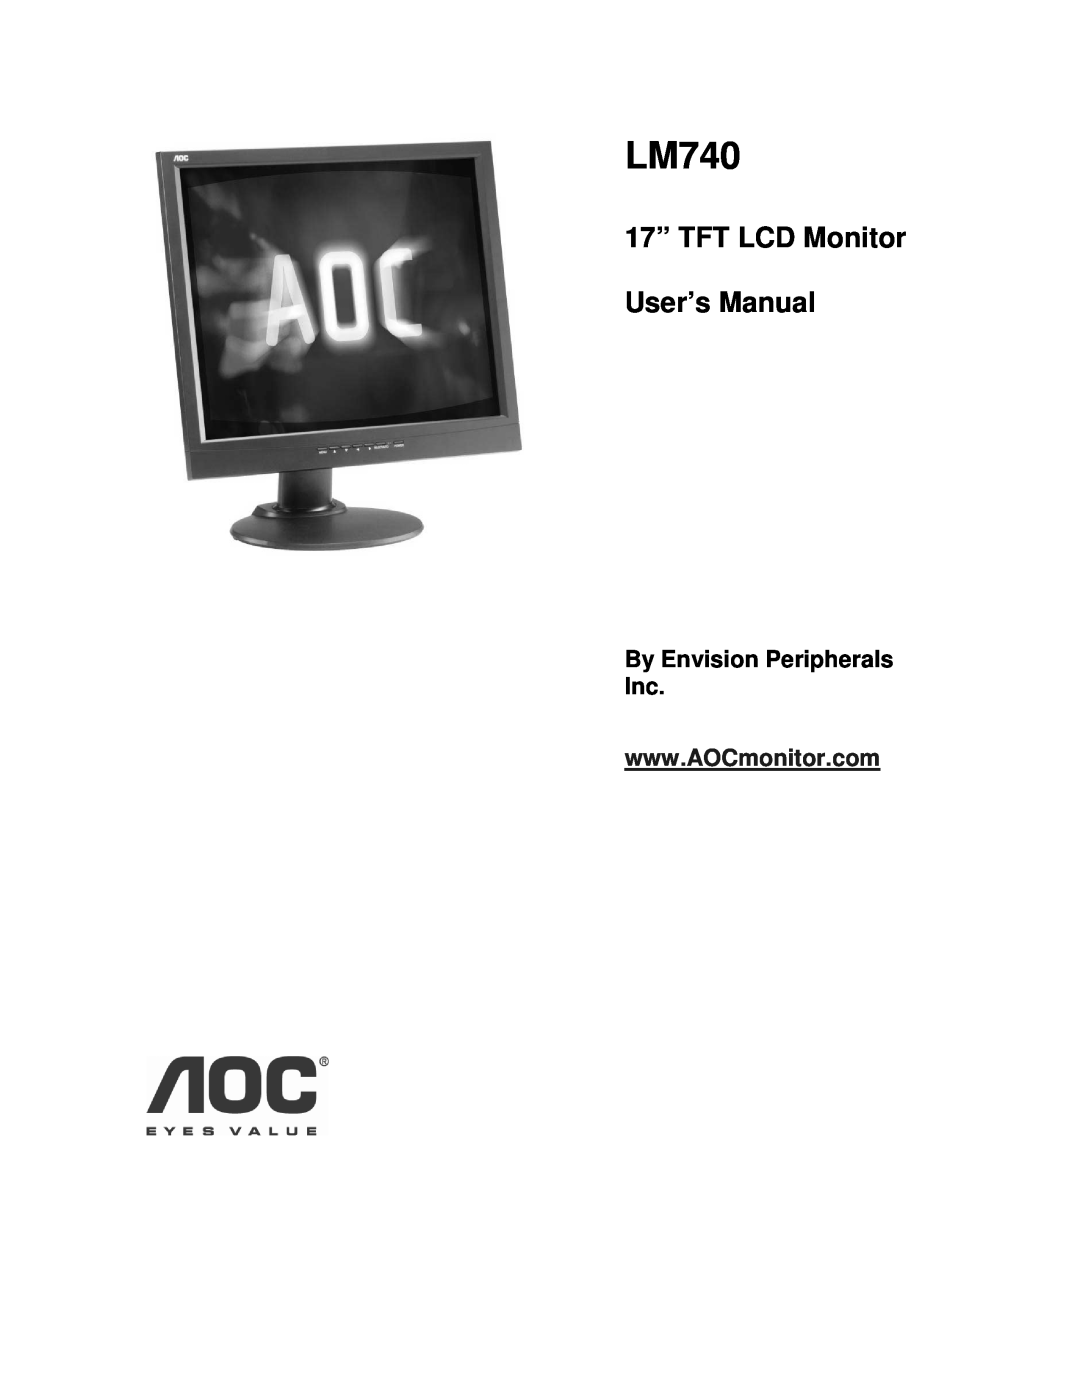 AOC LM740 user manual 17” TFT LCD Monitor User’s Manual 